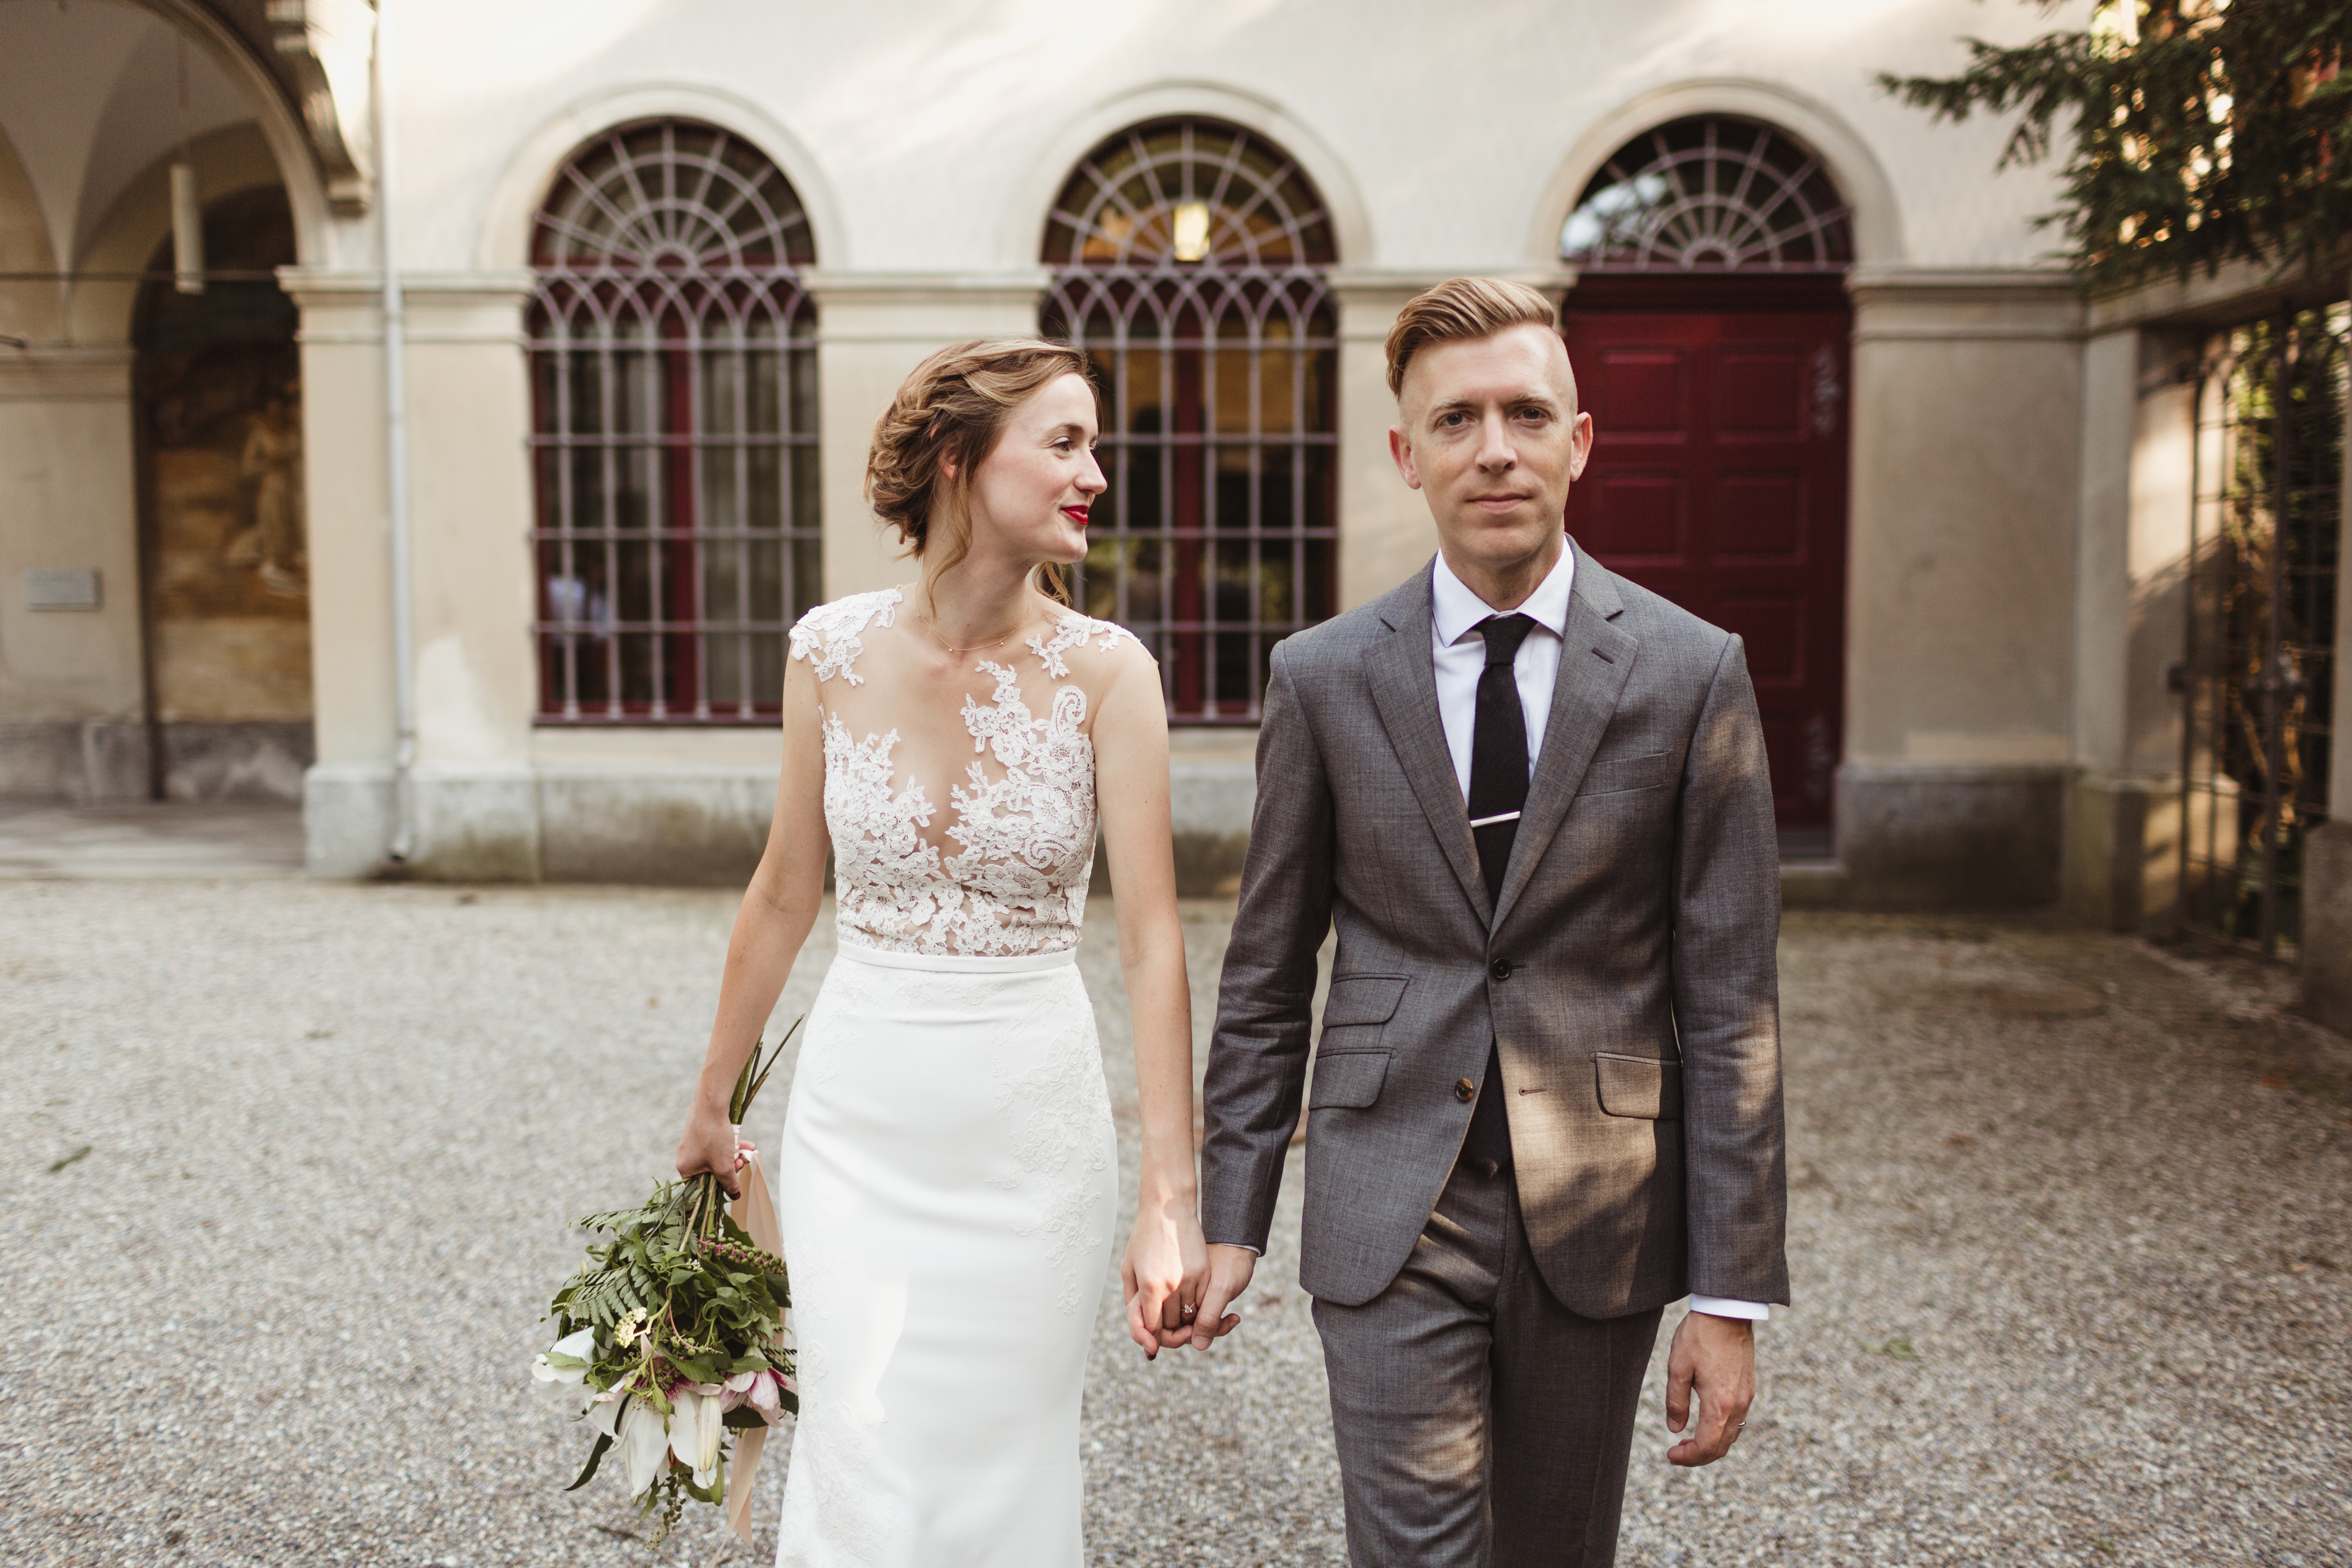 Shelby and Michael's Intimate Wedding in Zurich, Switzerland